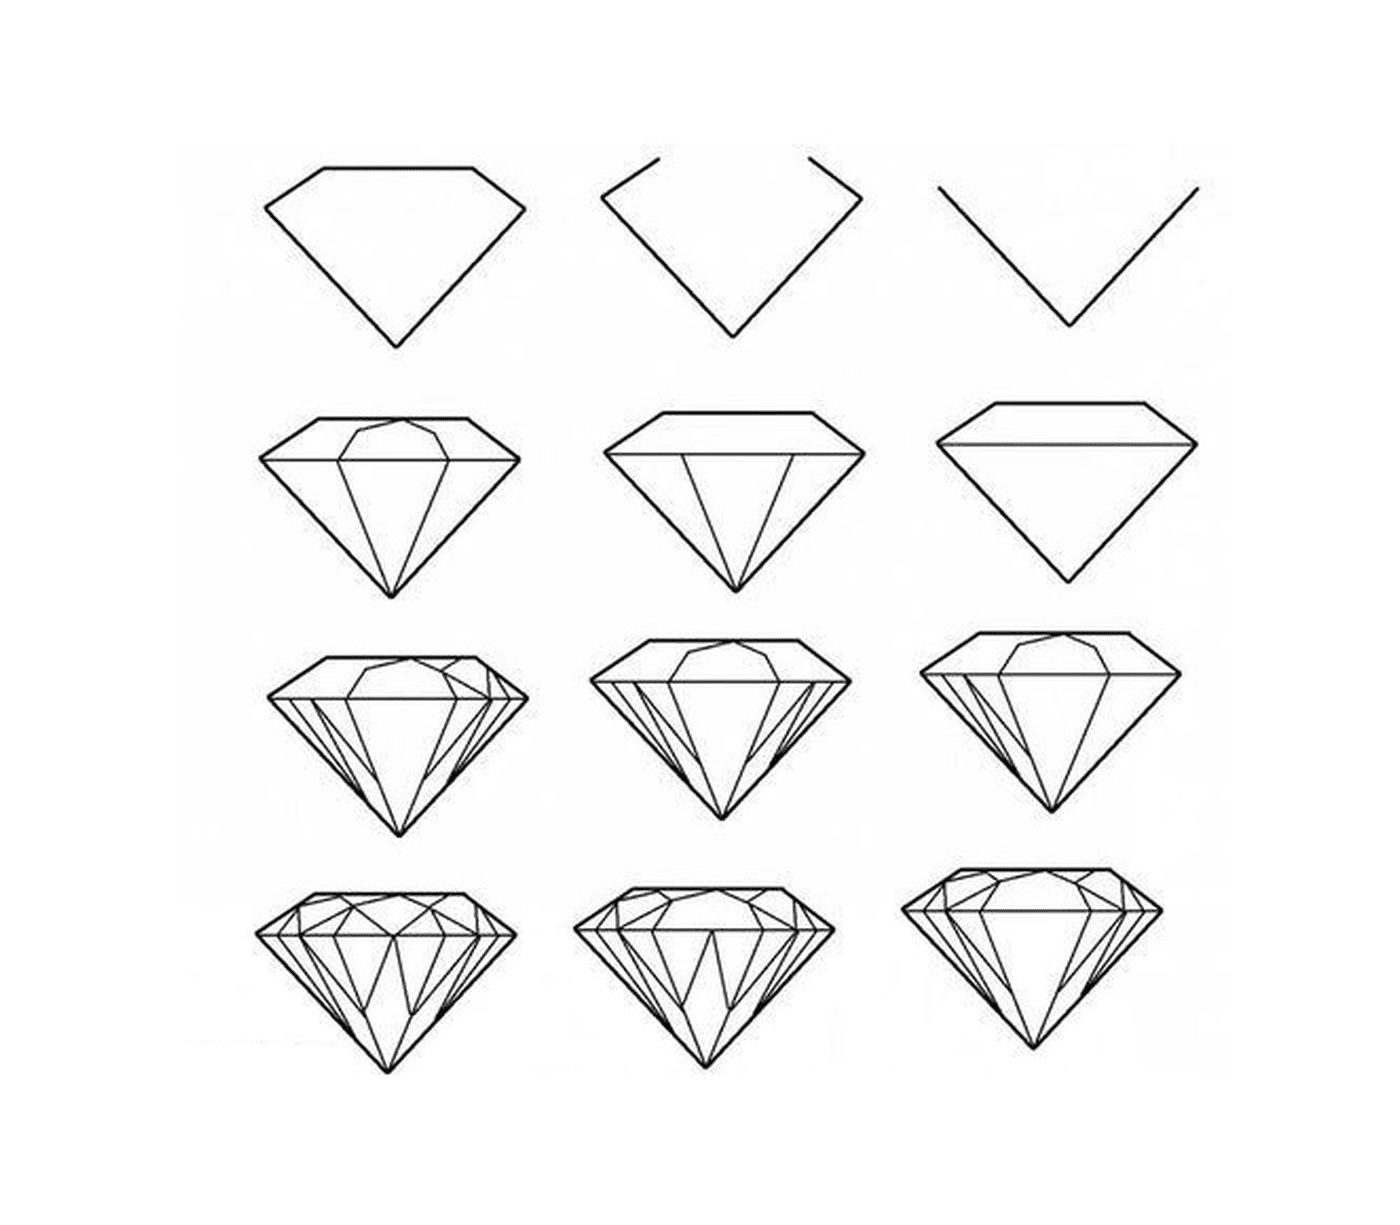  A series of diamond drawings 